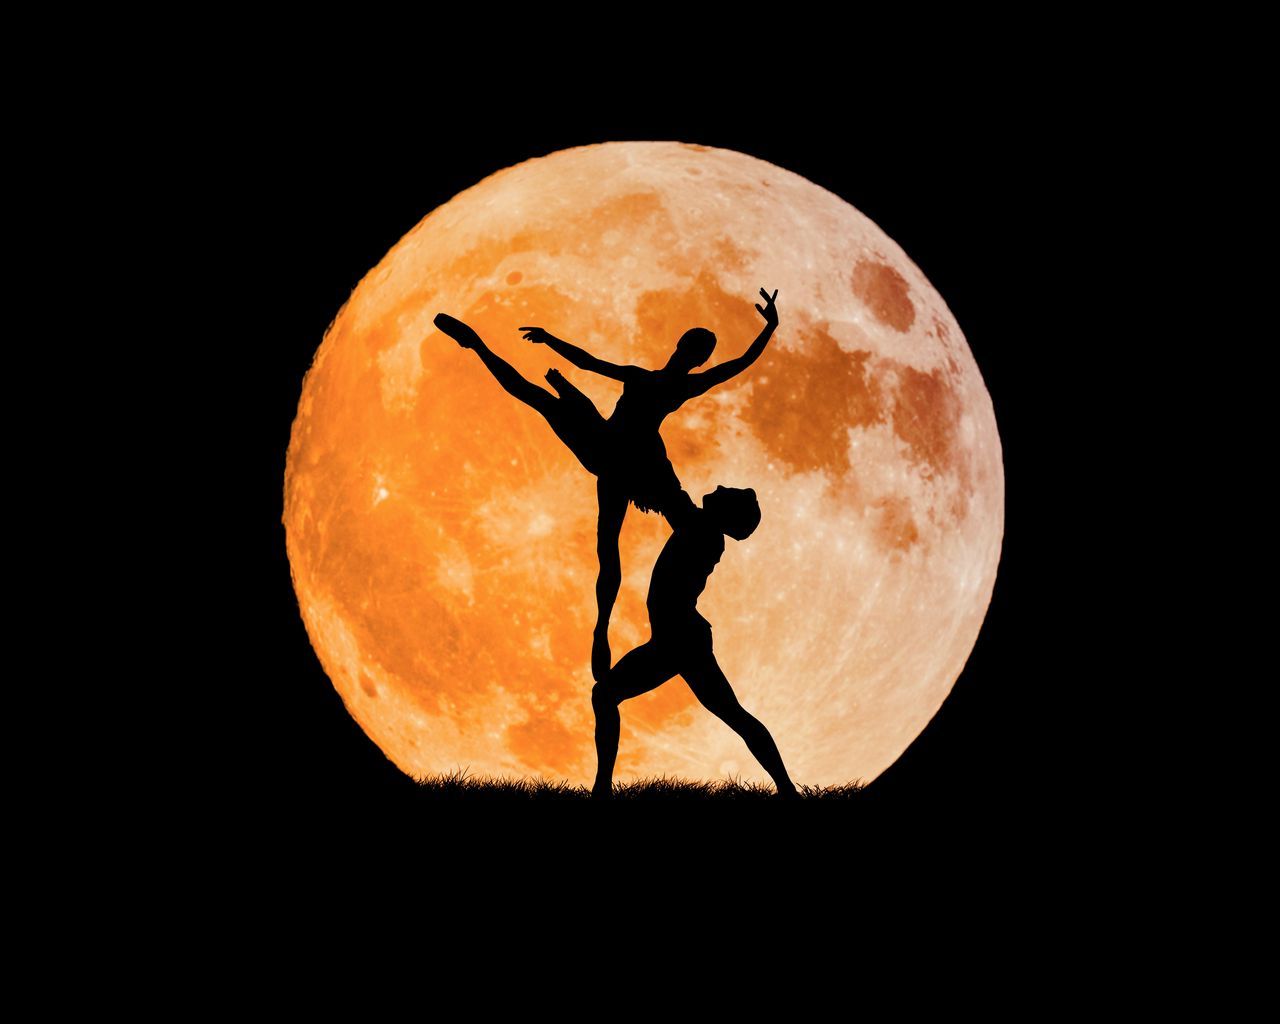 Download wallpaper 1280x1024 ballet, moon, silhouette standard 5:4 HD background